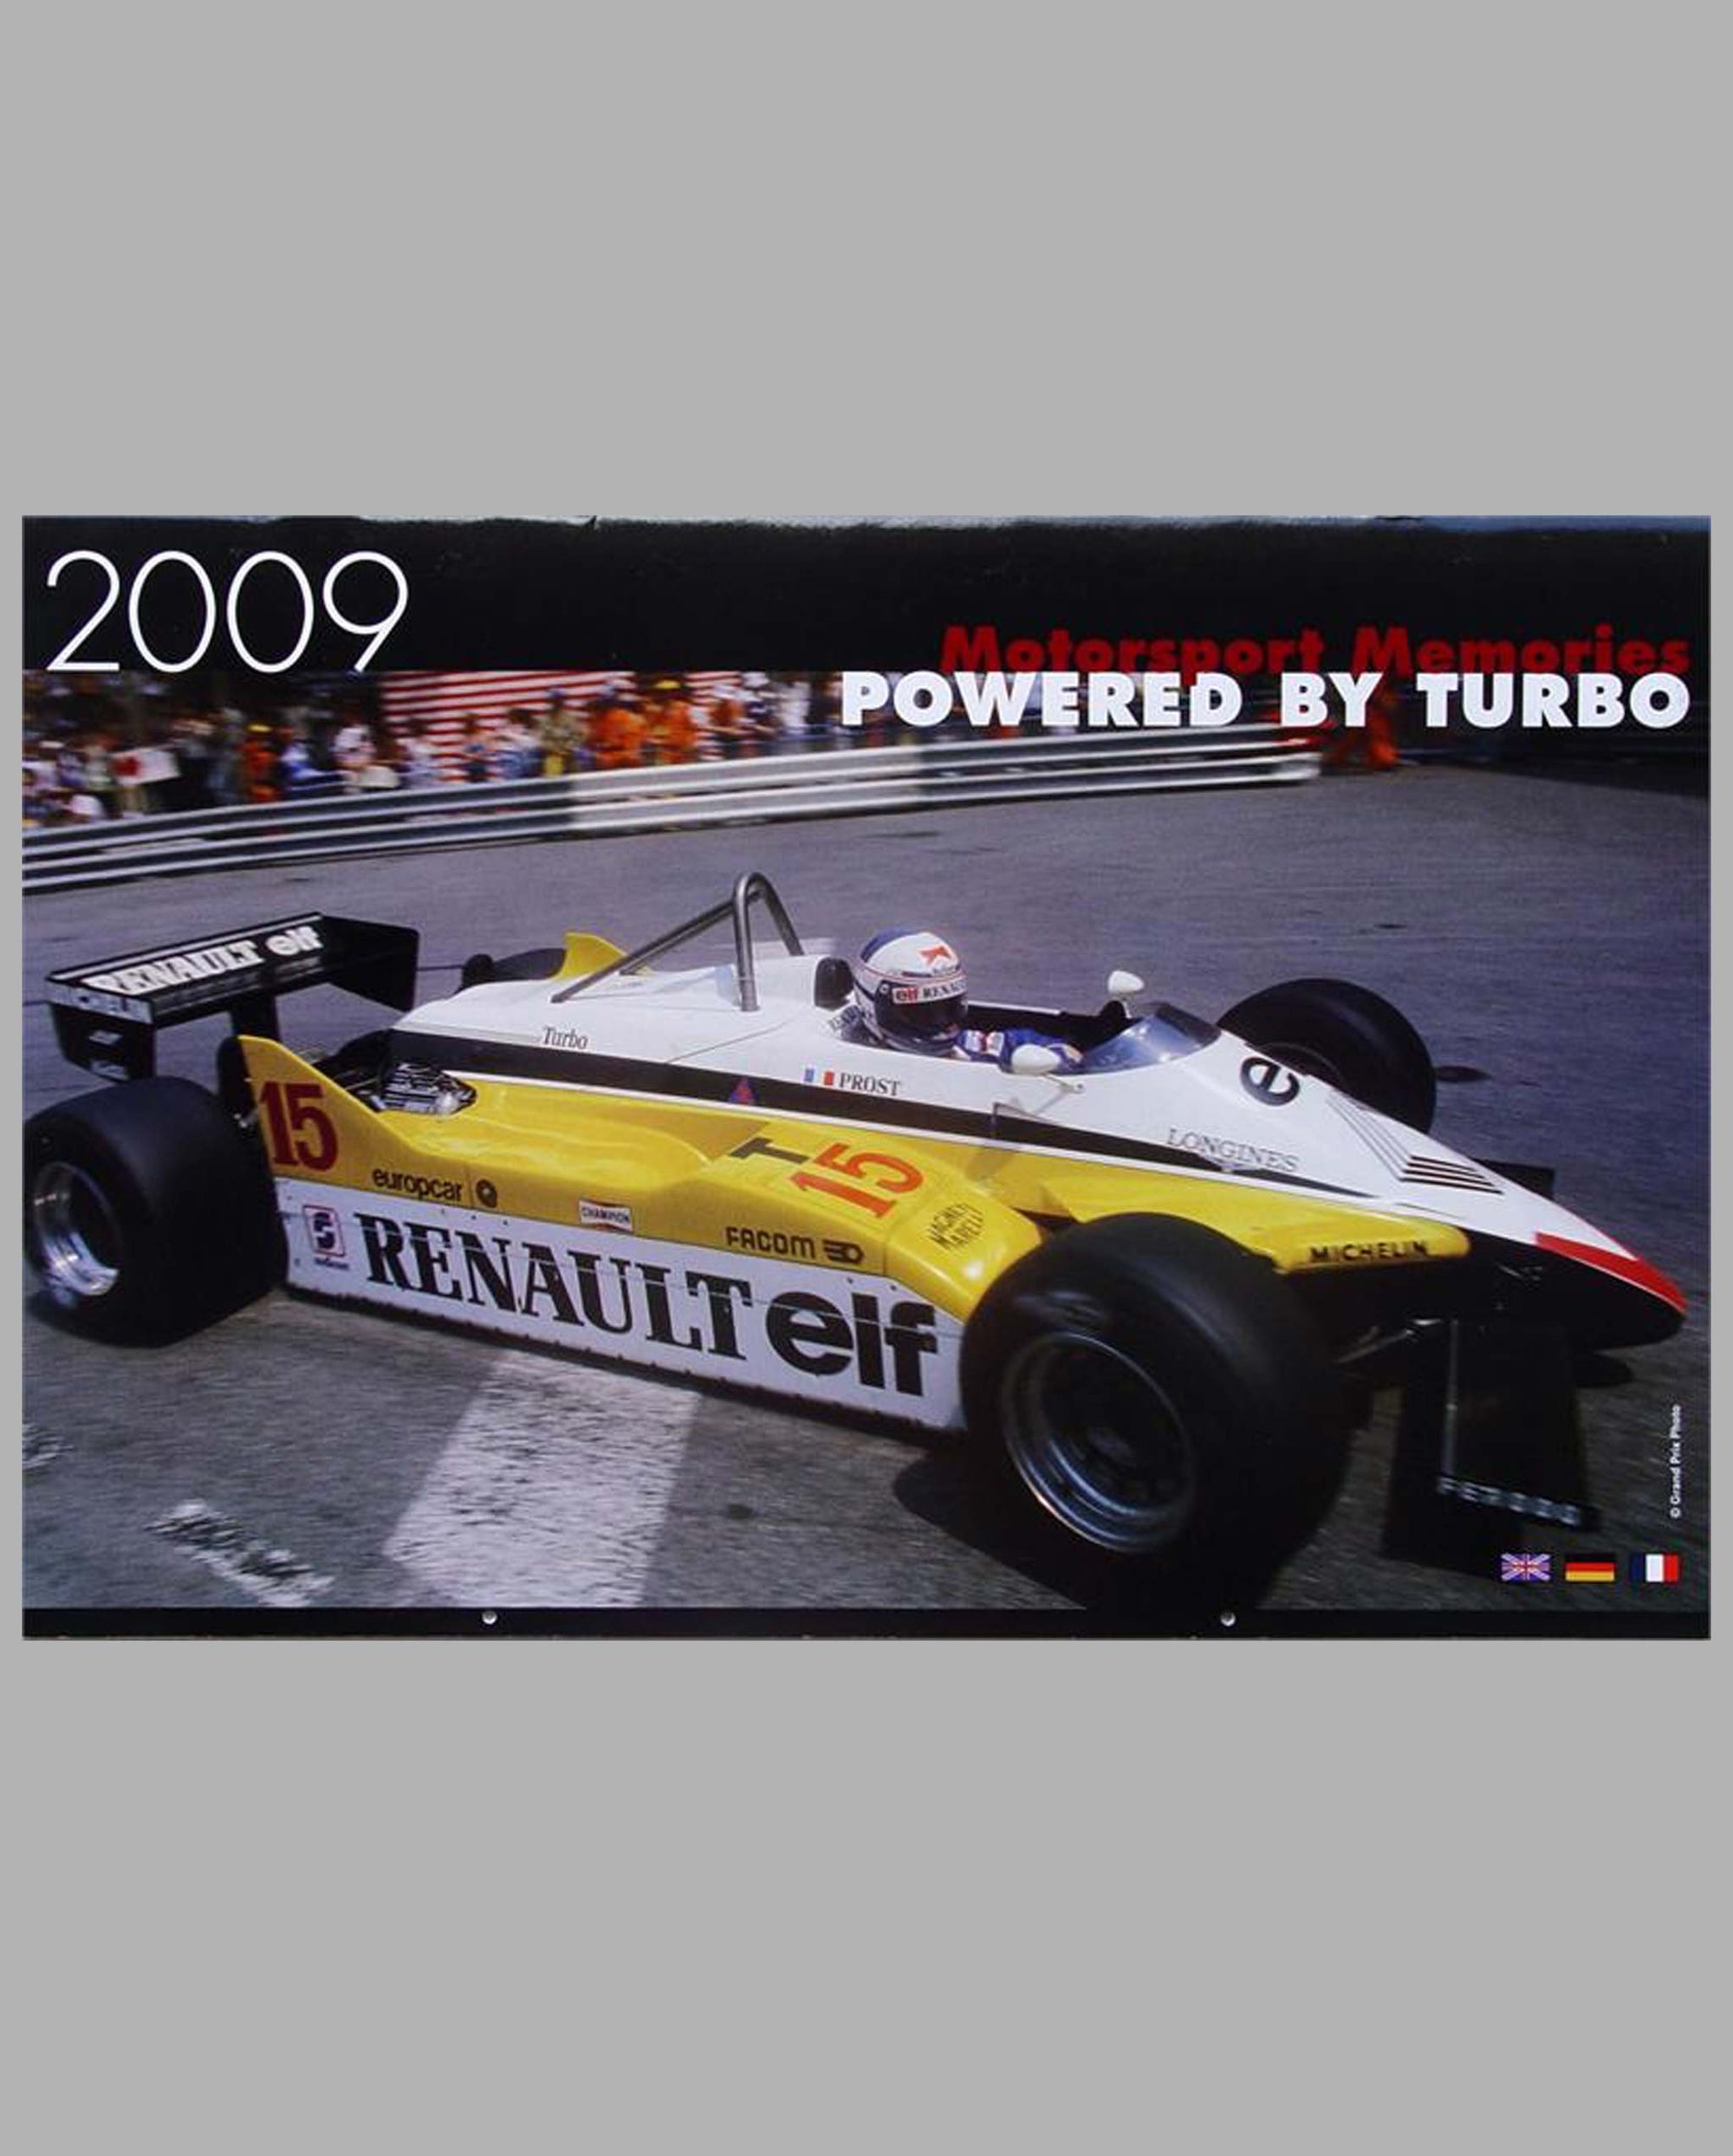 Classic Grand Prix Calendar for 2009